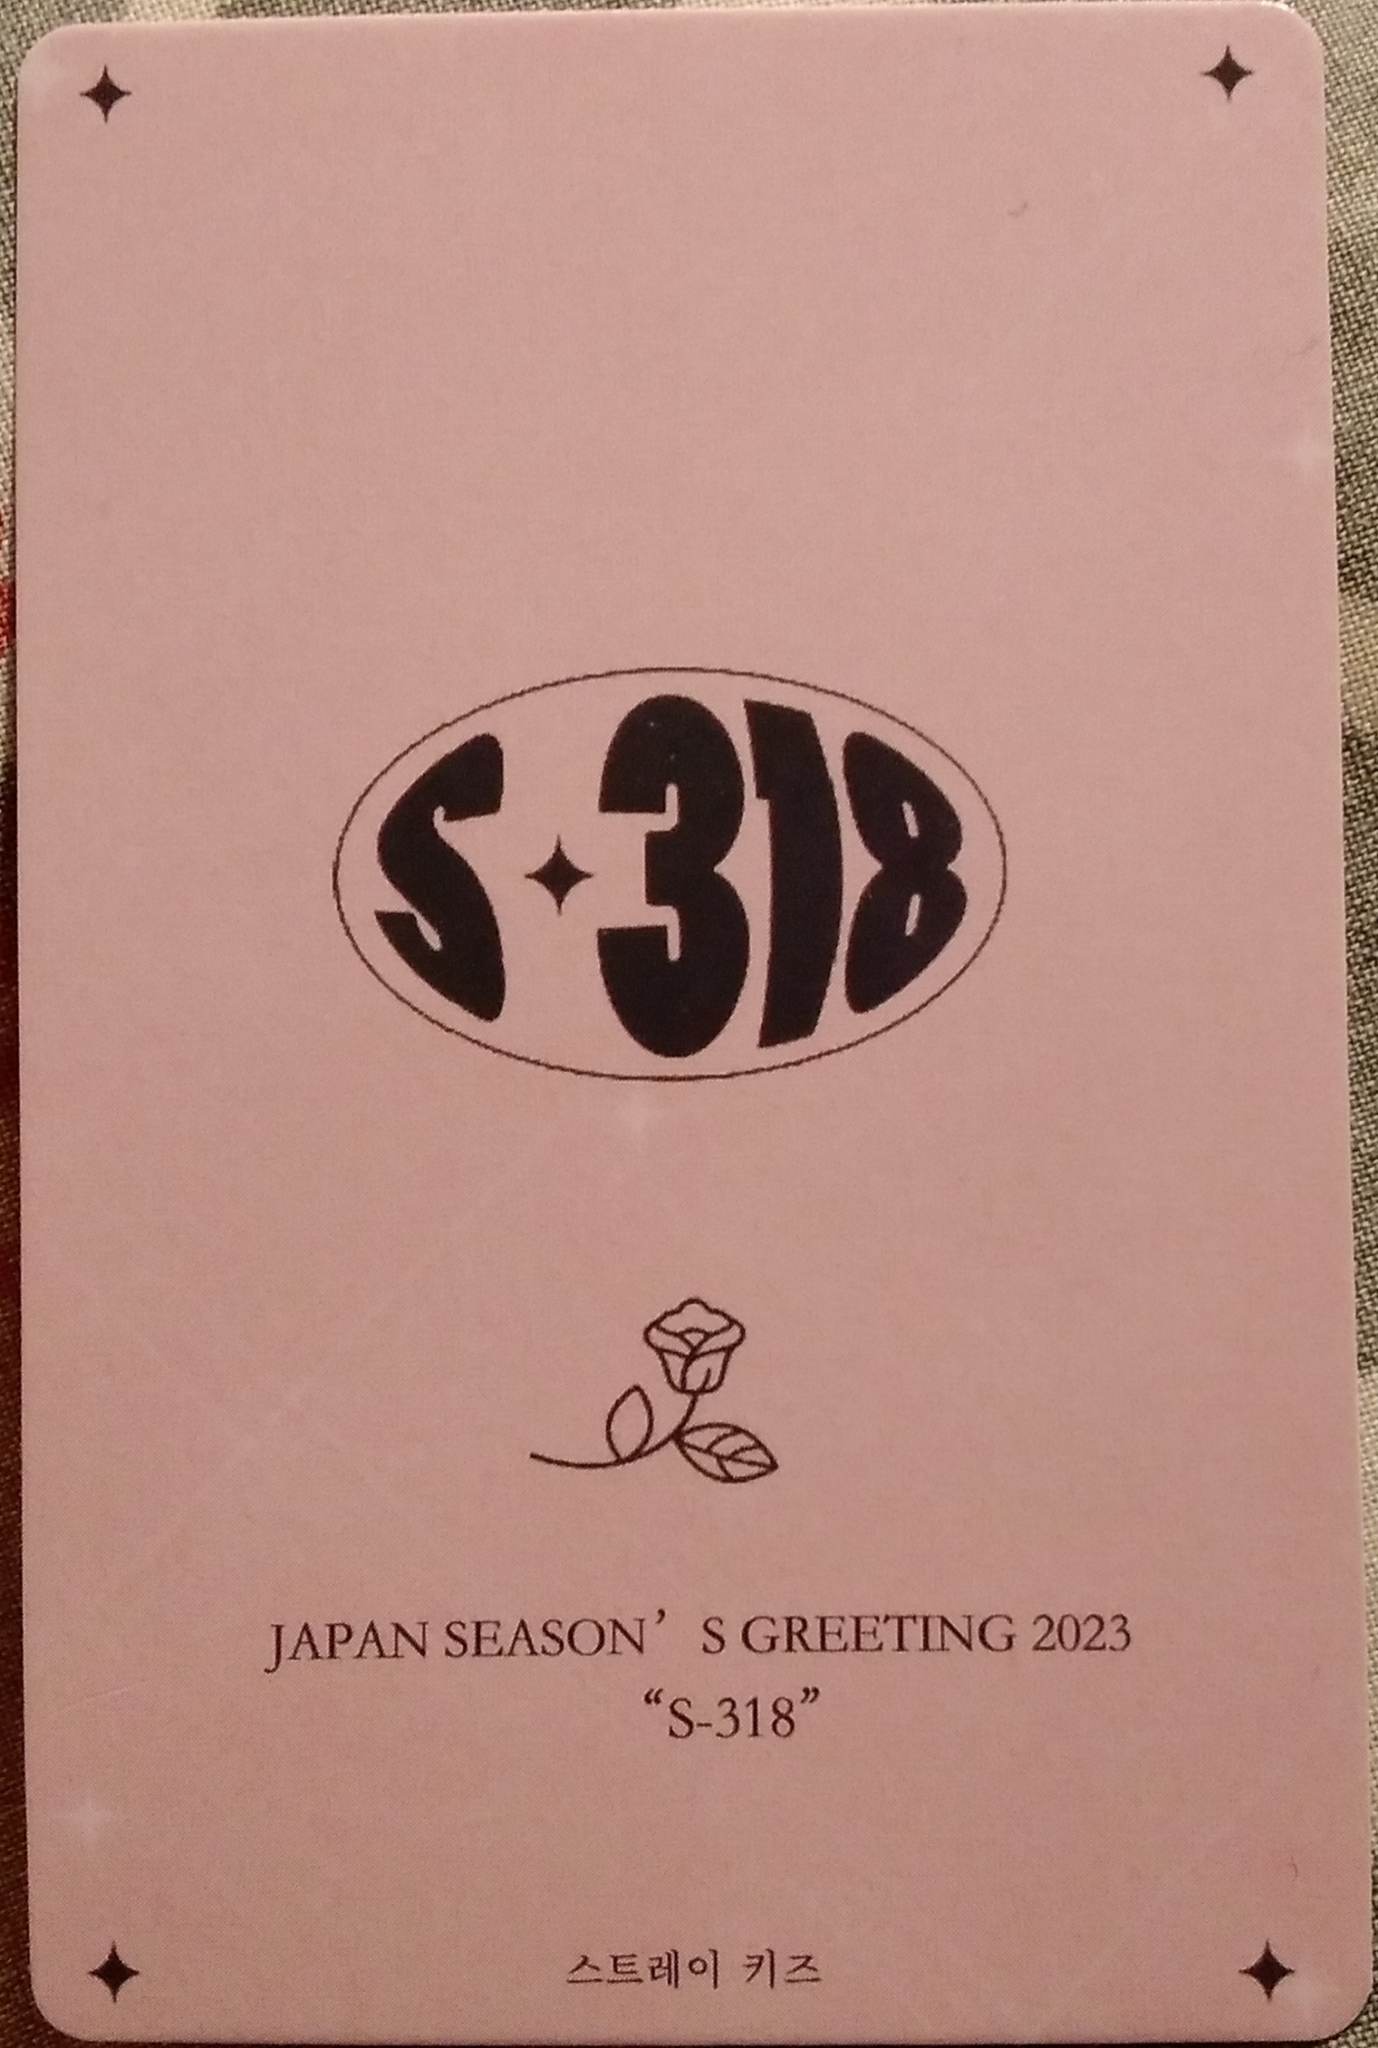 Photocard  STRAYKIDS  Japan season s greetings 2023  "S-318"  Changbin